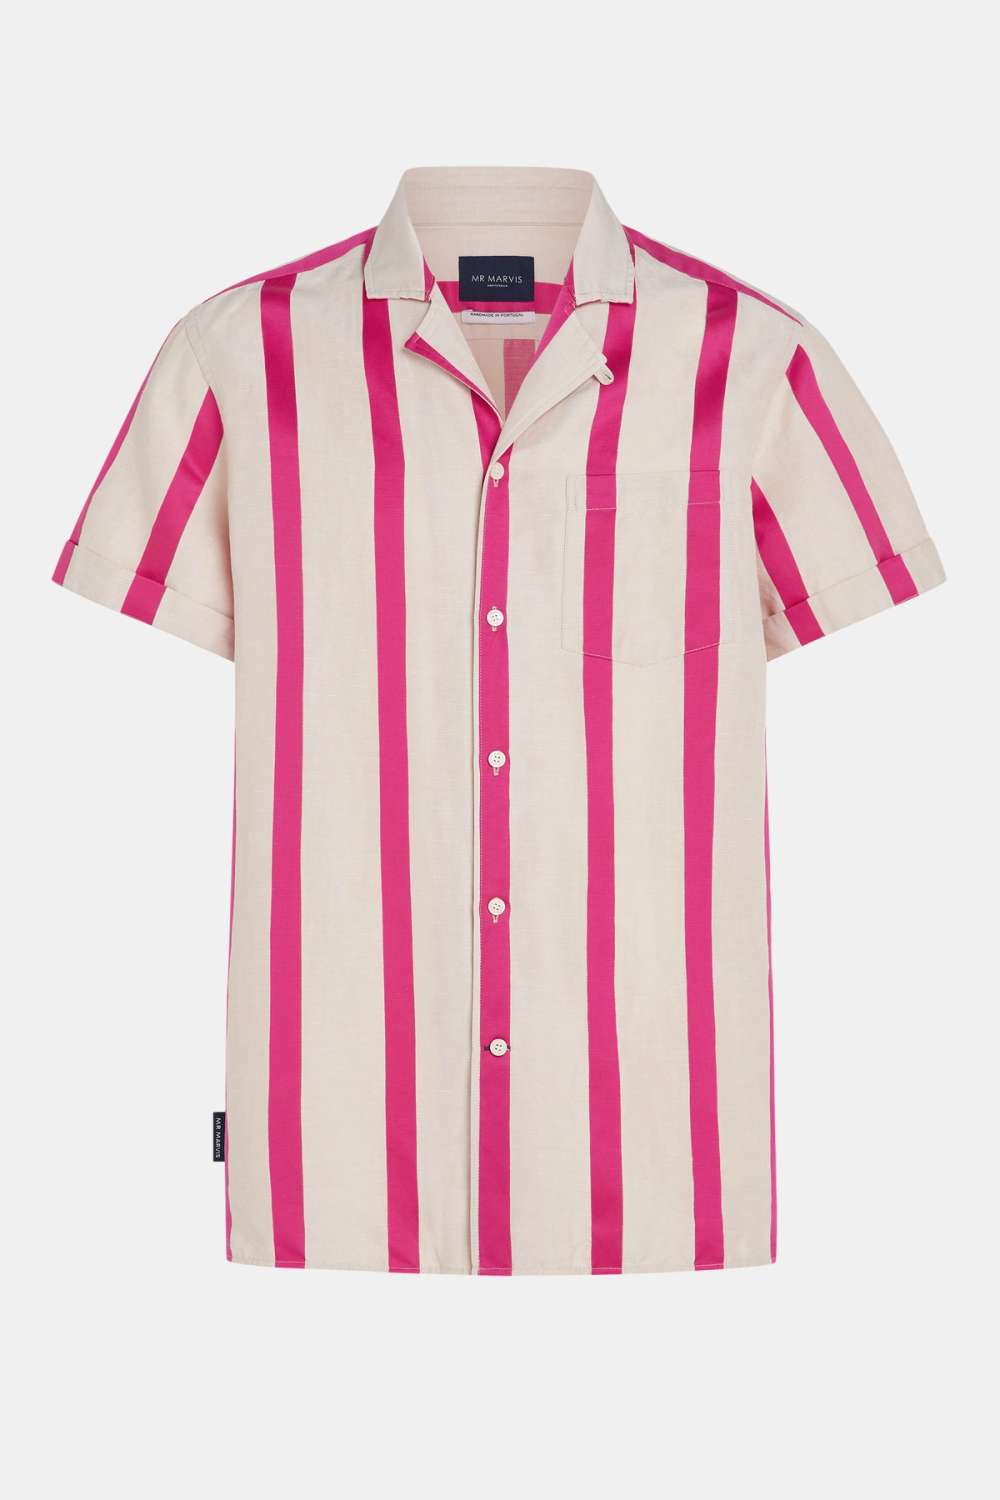 Rosa Stripes - The Summer Shirt